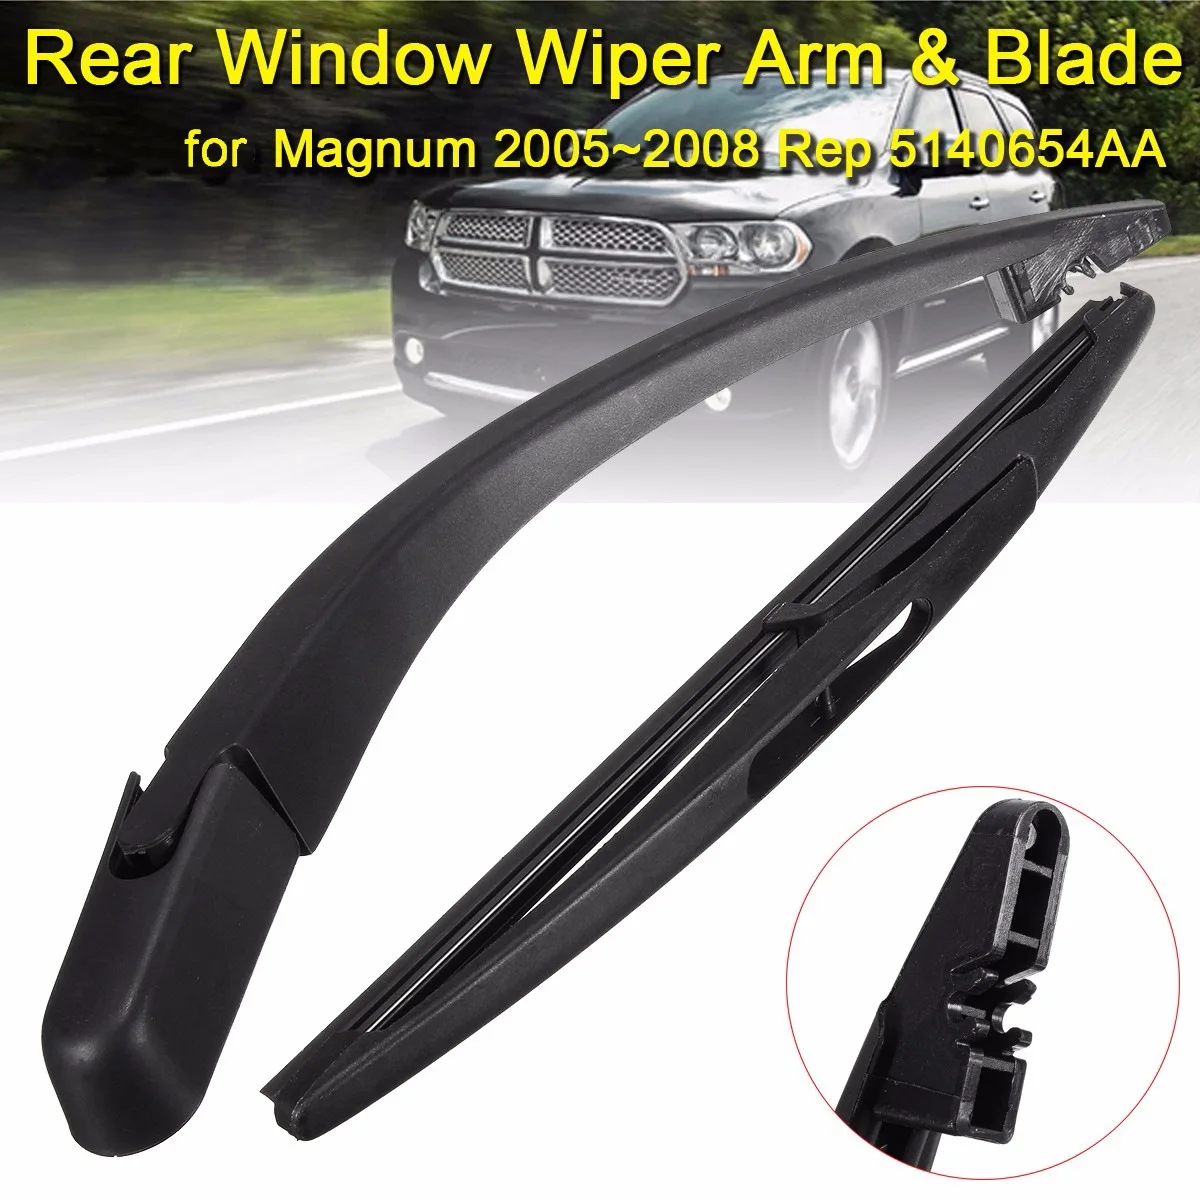 Rear Window Wiper Blade & Windshield Wipers Arm for Magnum 2005-2008, Nitro 2007-2009, 300C 2005 -2008 5140654AA